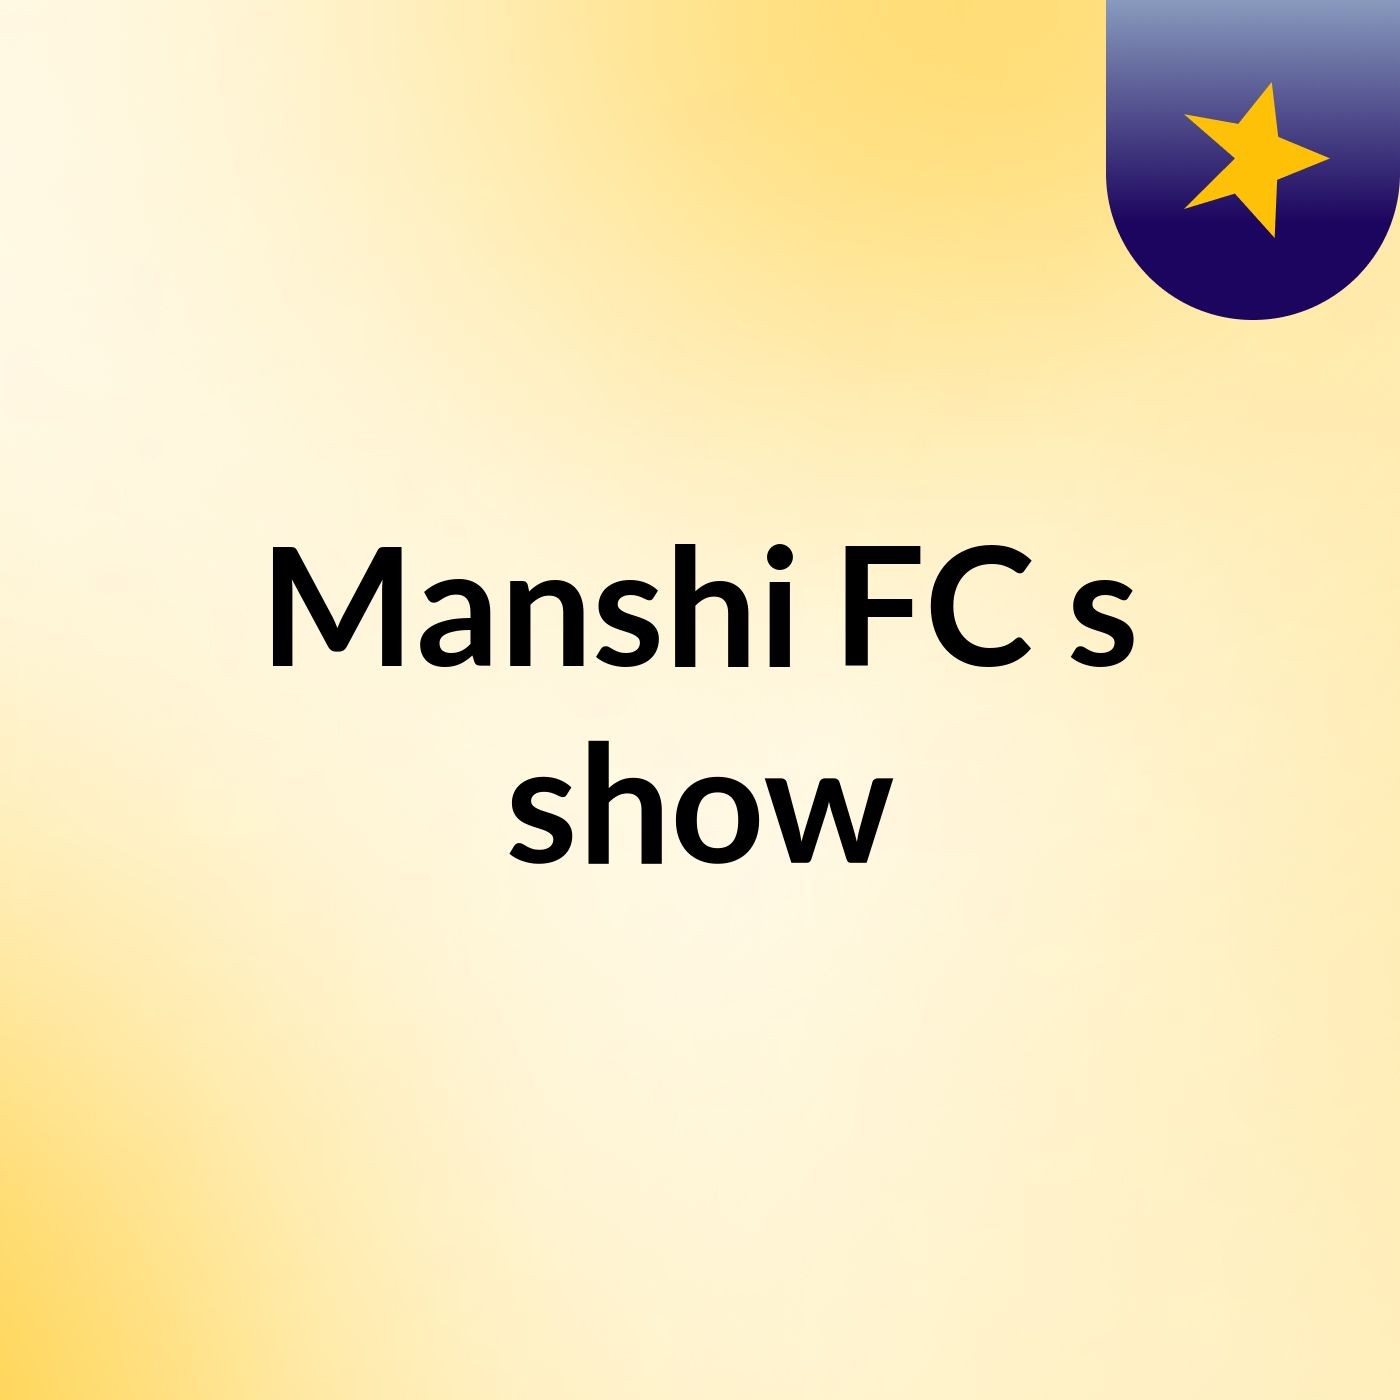 Manshi FC's show